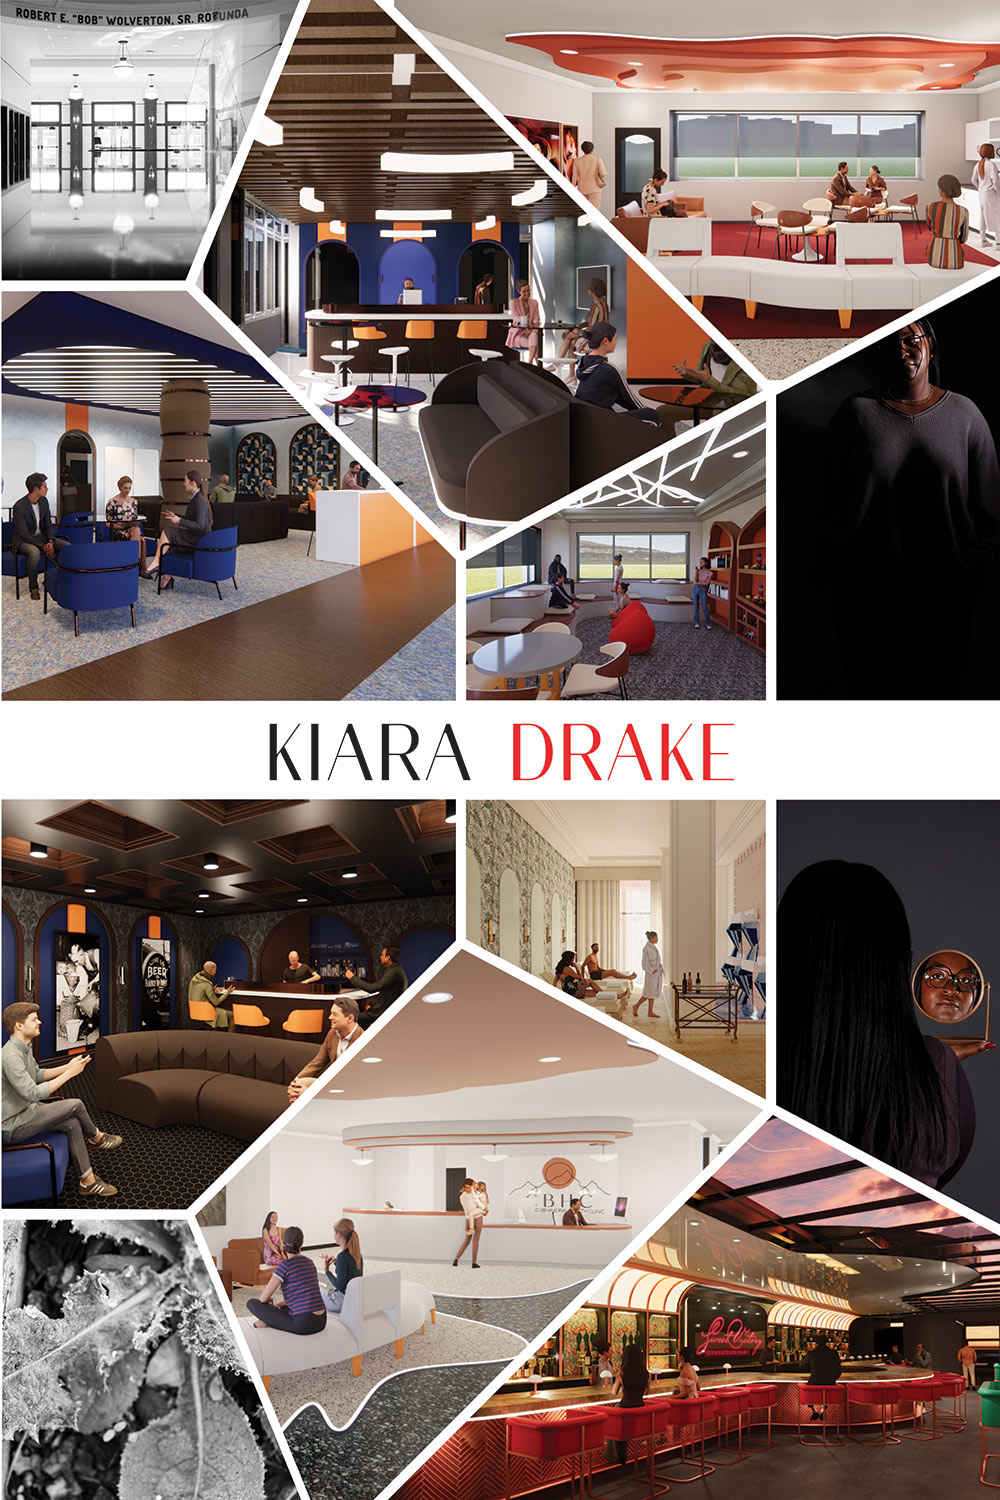 Kiara Drake's interior design senior exhibit board